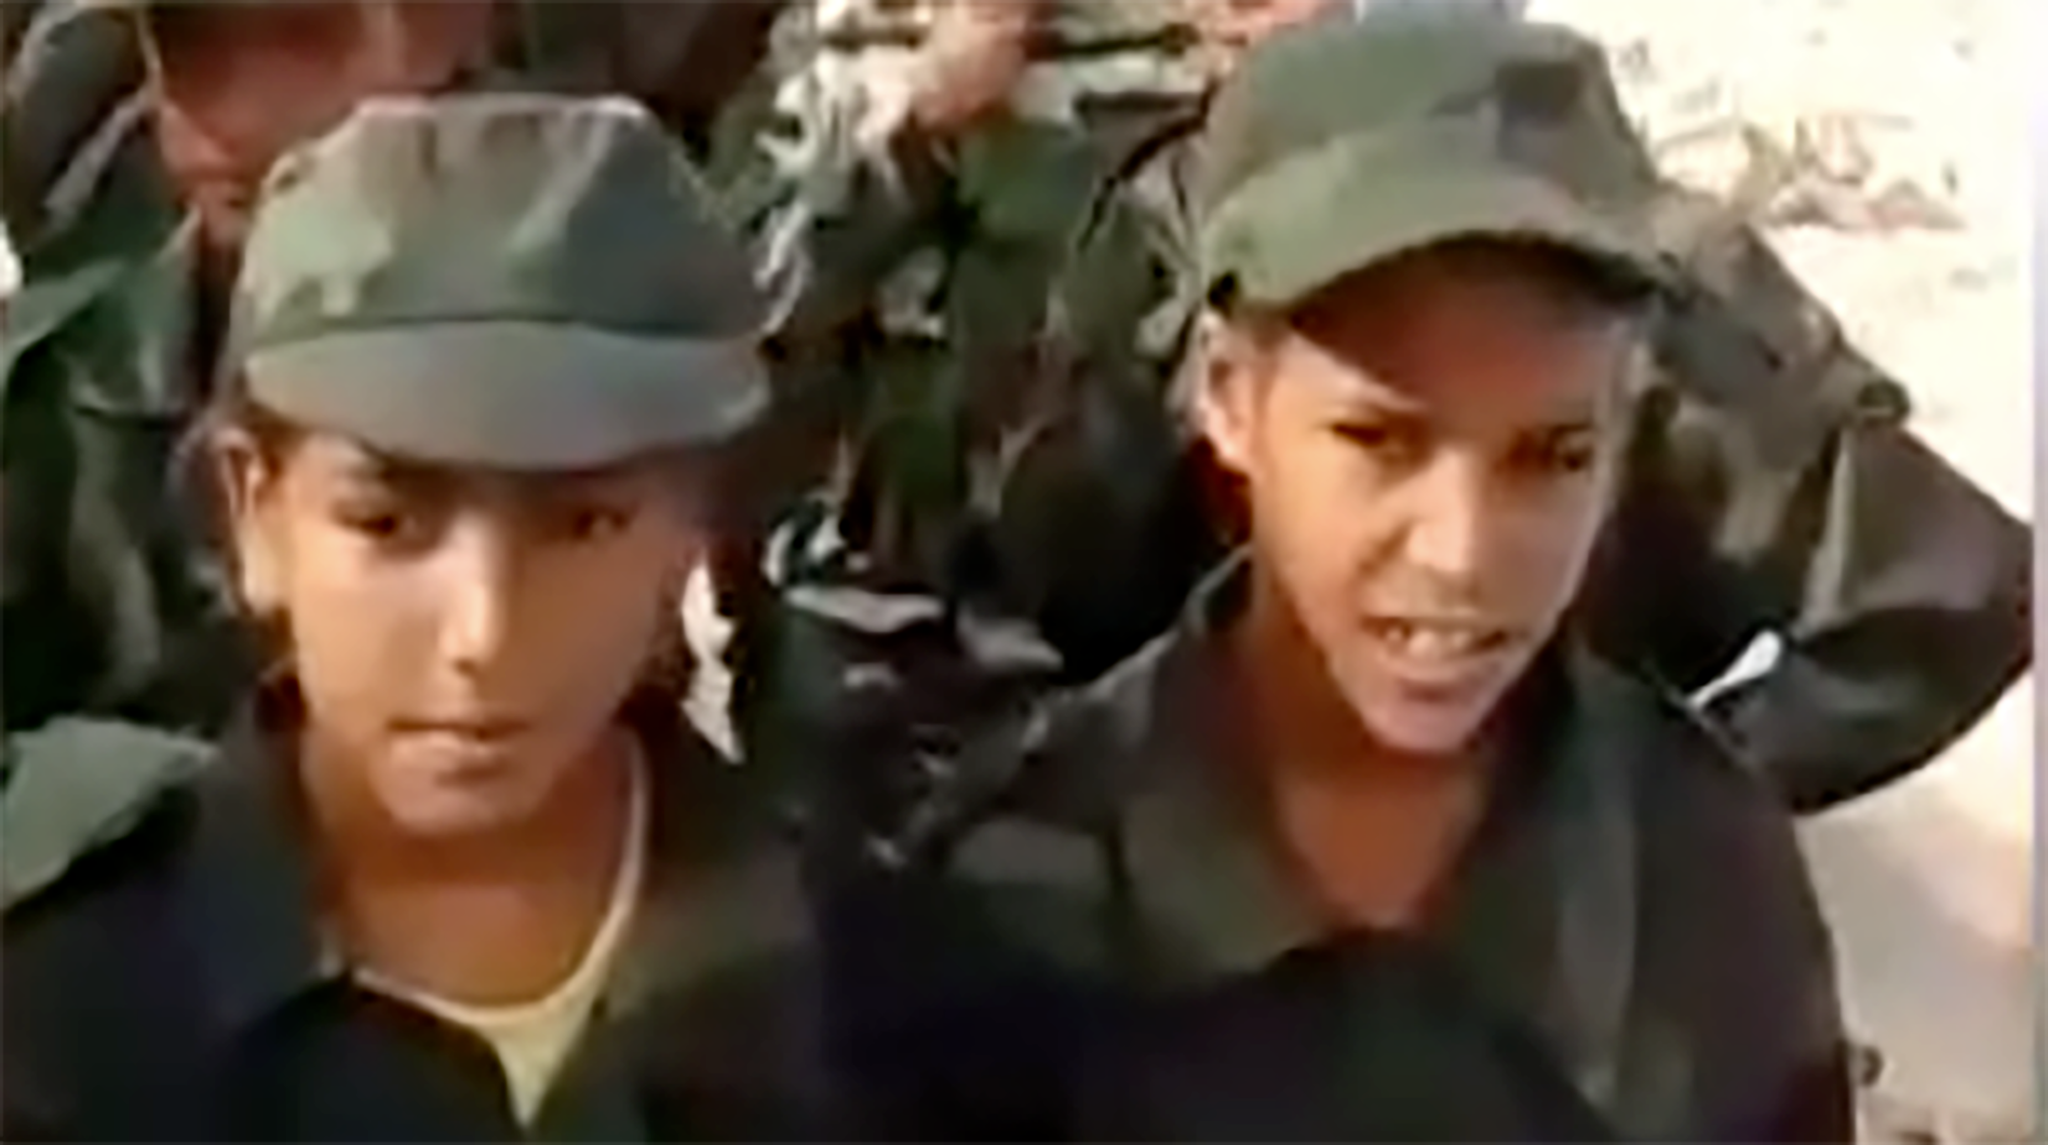 Geneva: Polisario militia should be held accountable for war crime of child soldier recruitment